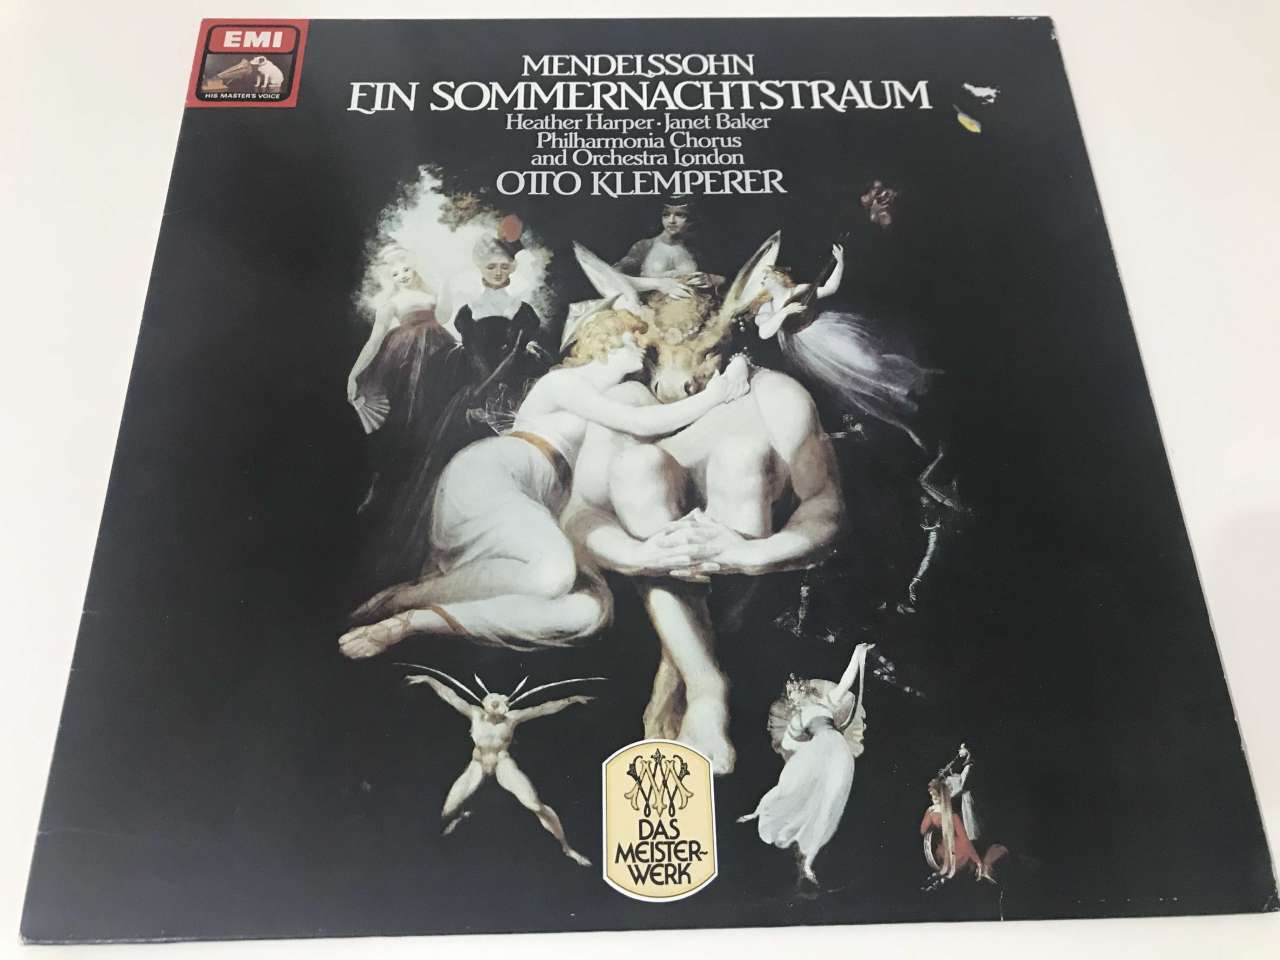 Mendelssohn - Philharmonia Chorus And Orchestra London - Otto Klemperer – Ein Sommernachtstraum